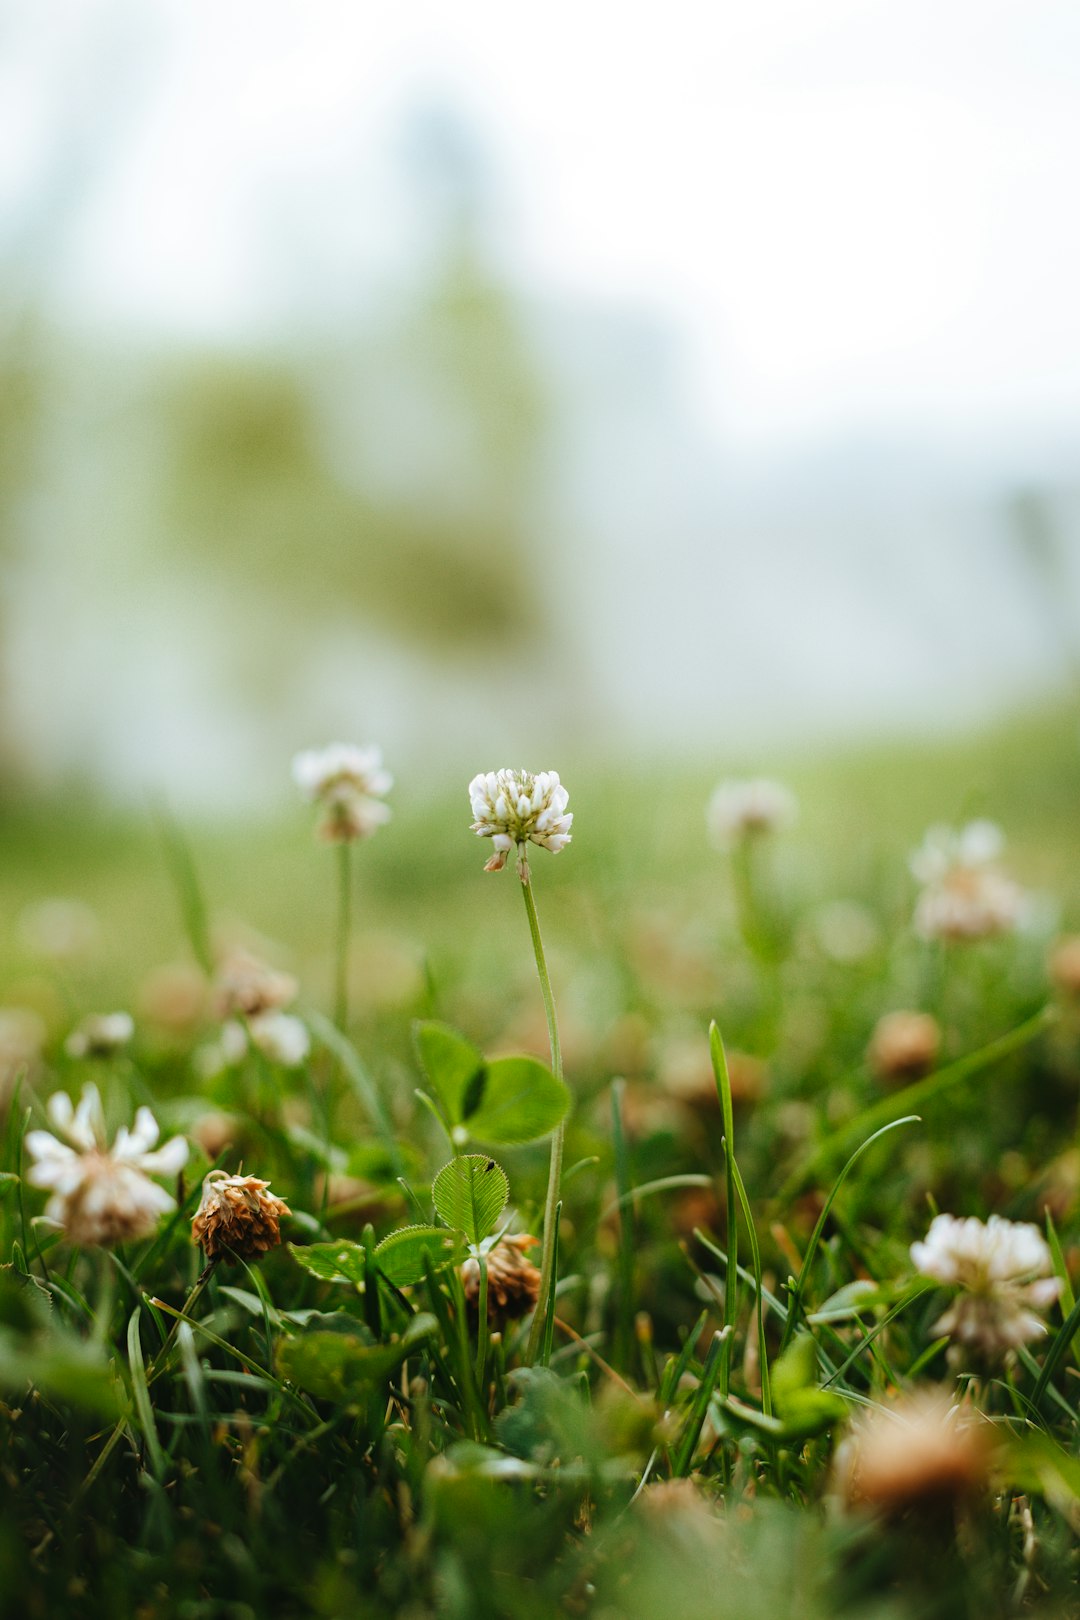 white flower on green grass during daytime